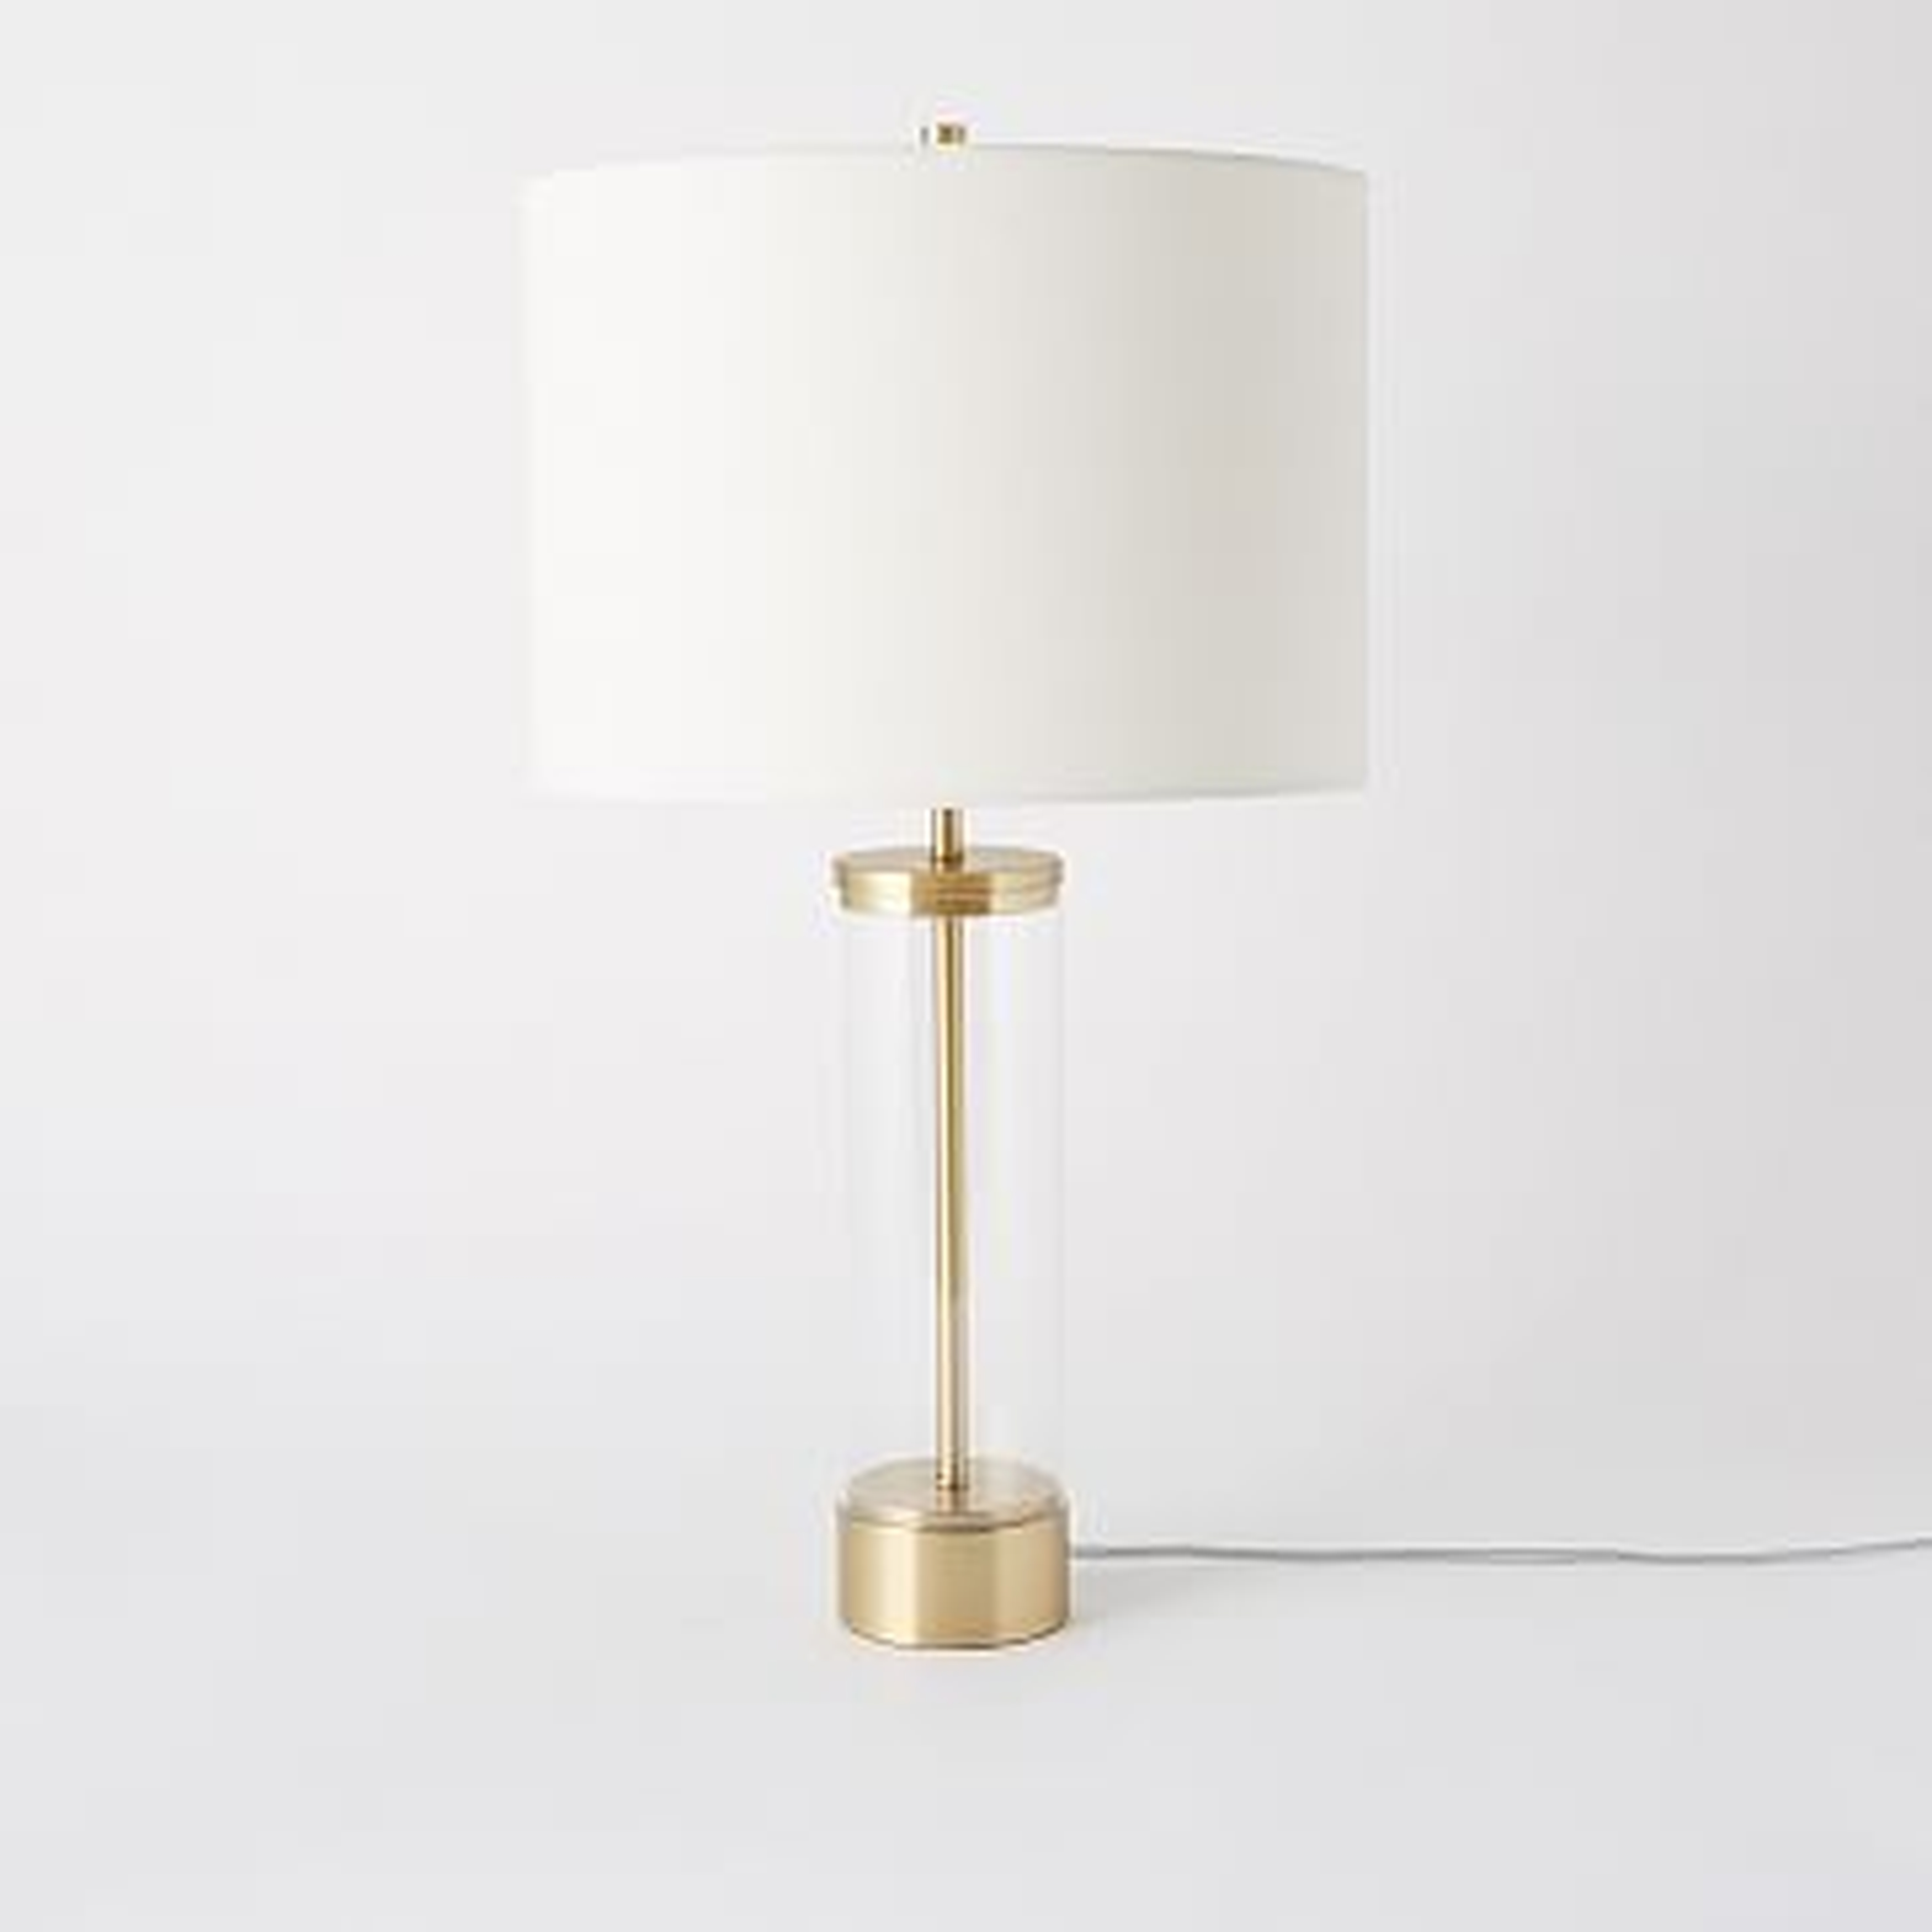 Acrylic Column Table Lamp, Antique Brass - West Elm